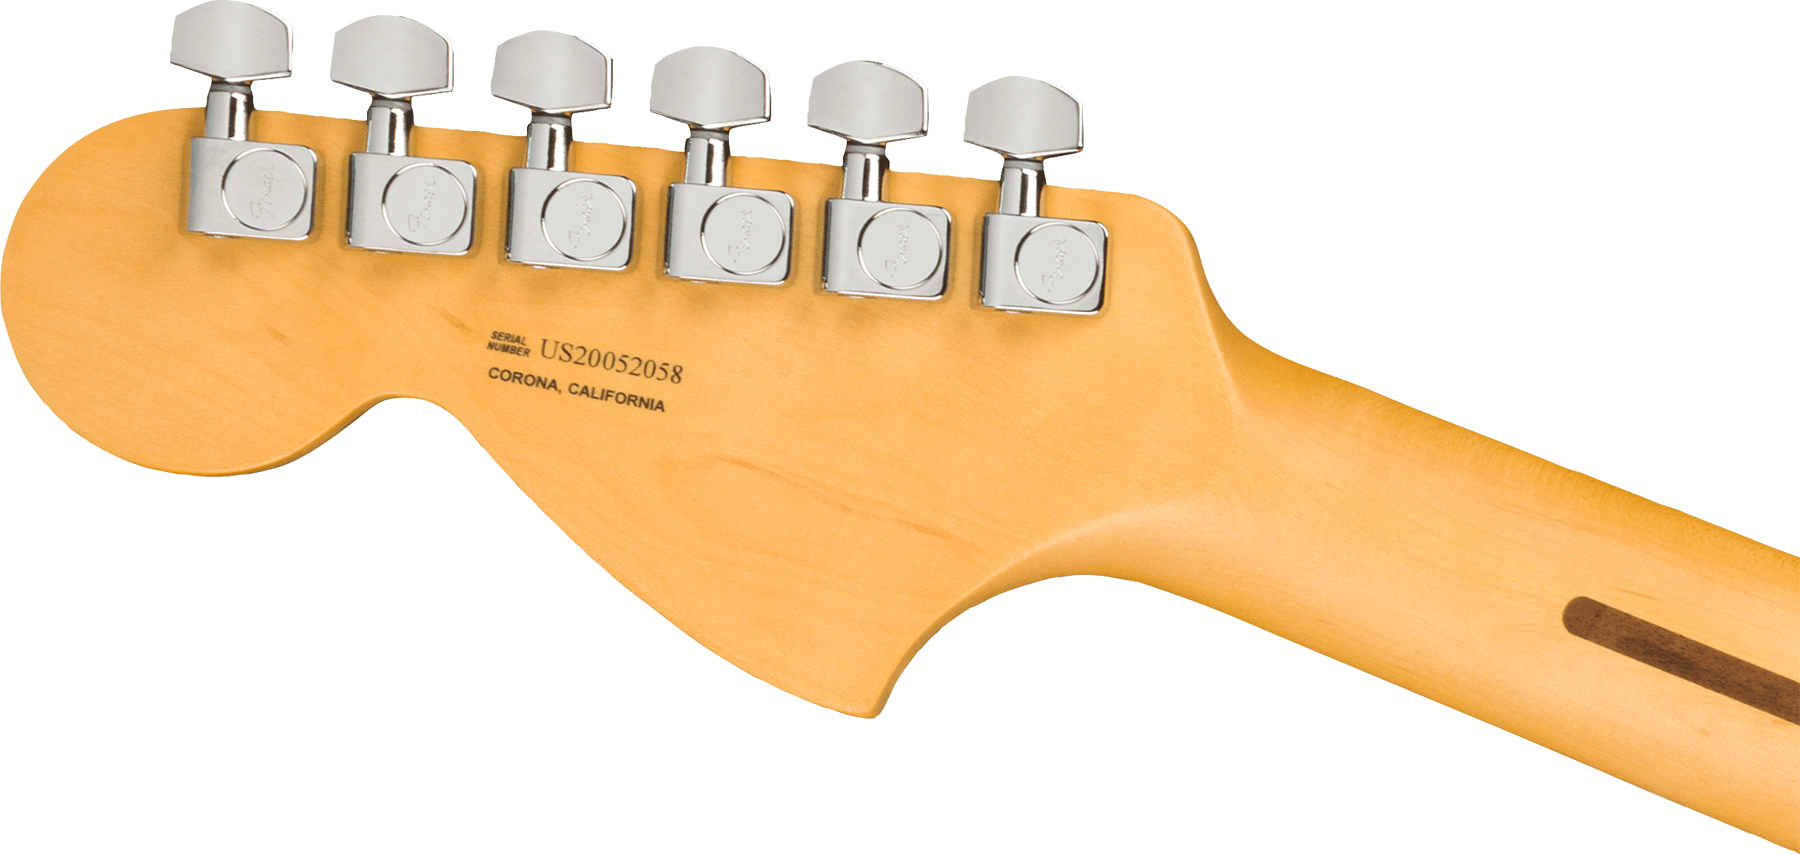 Fender Tele Deluxe American Professional Ii Usa Rw - Mercury - Tel shape electric guitar - Variation 1